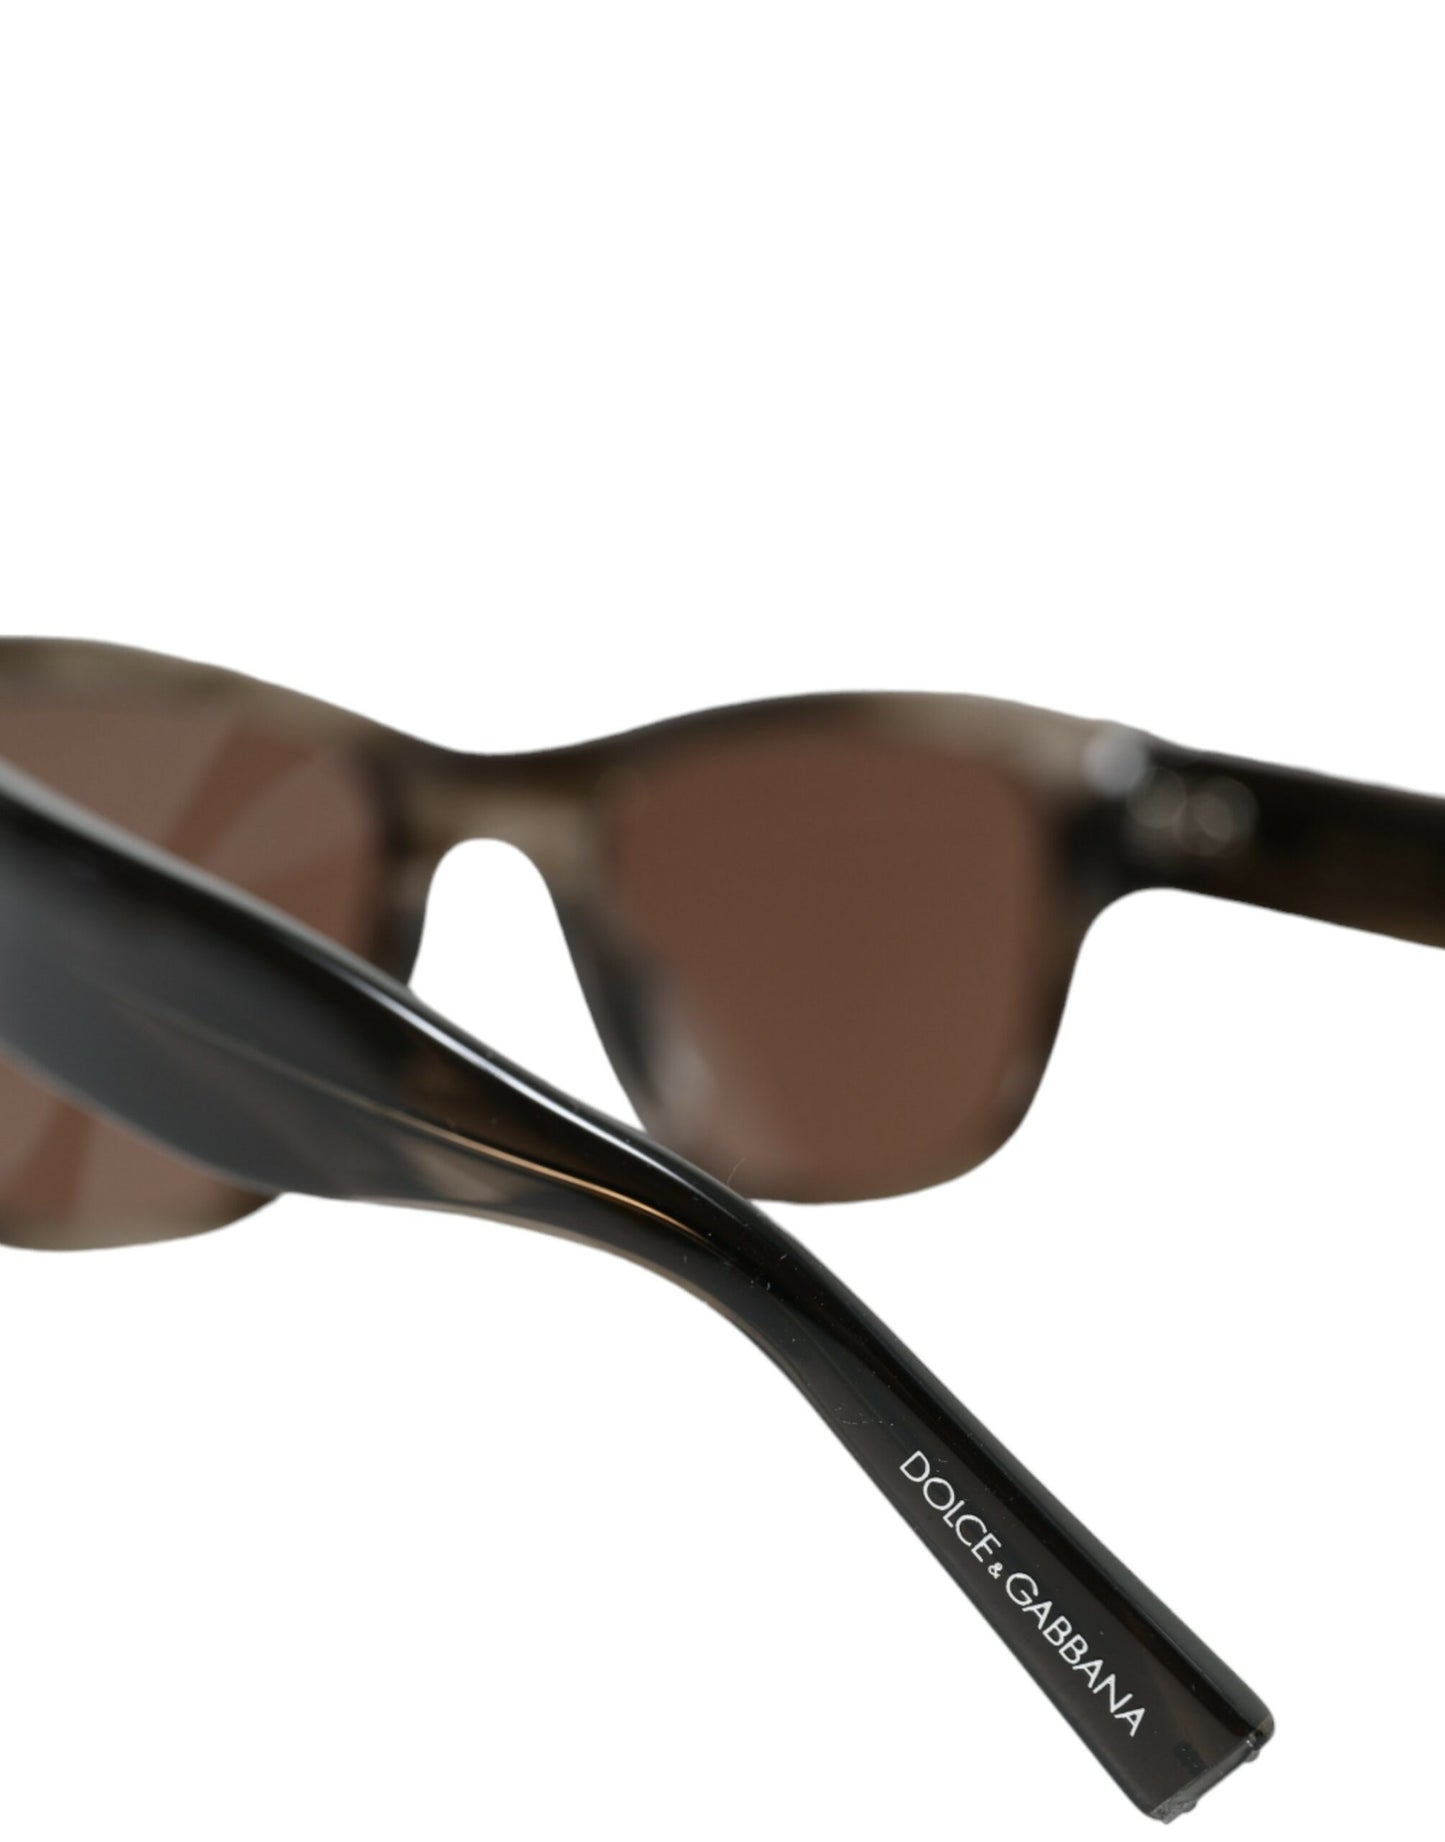 Elegant UV Protection Brown Sunglasses